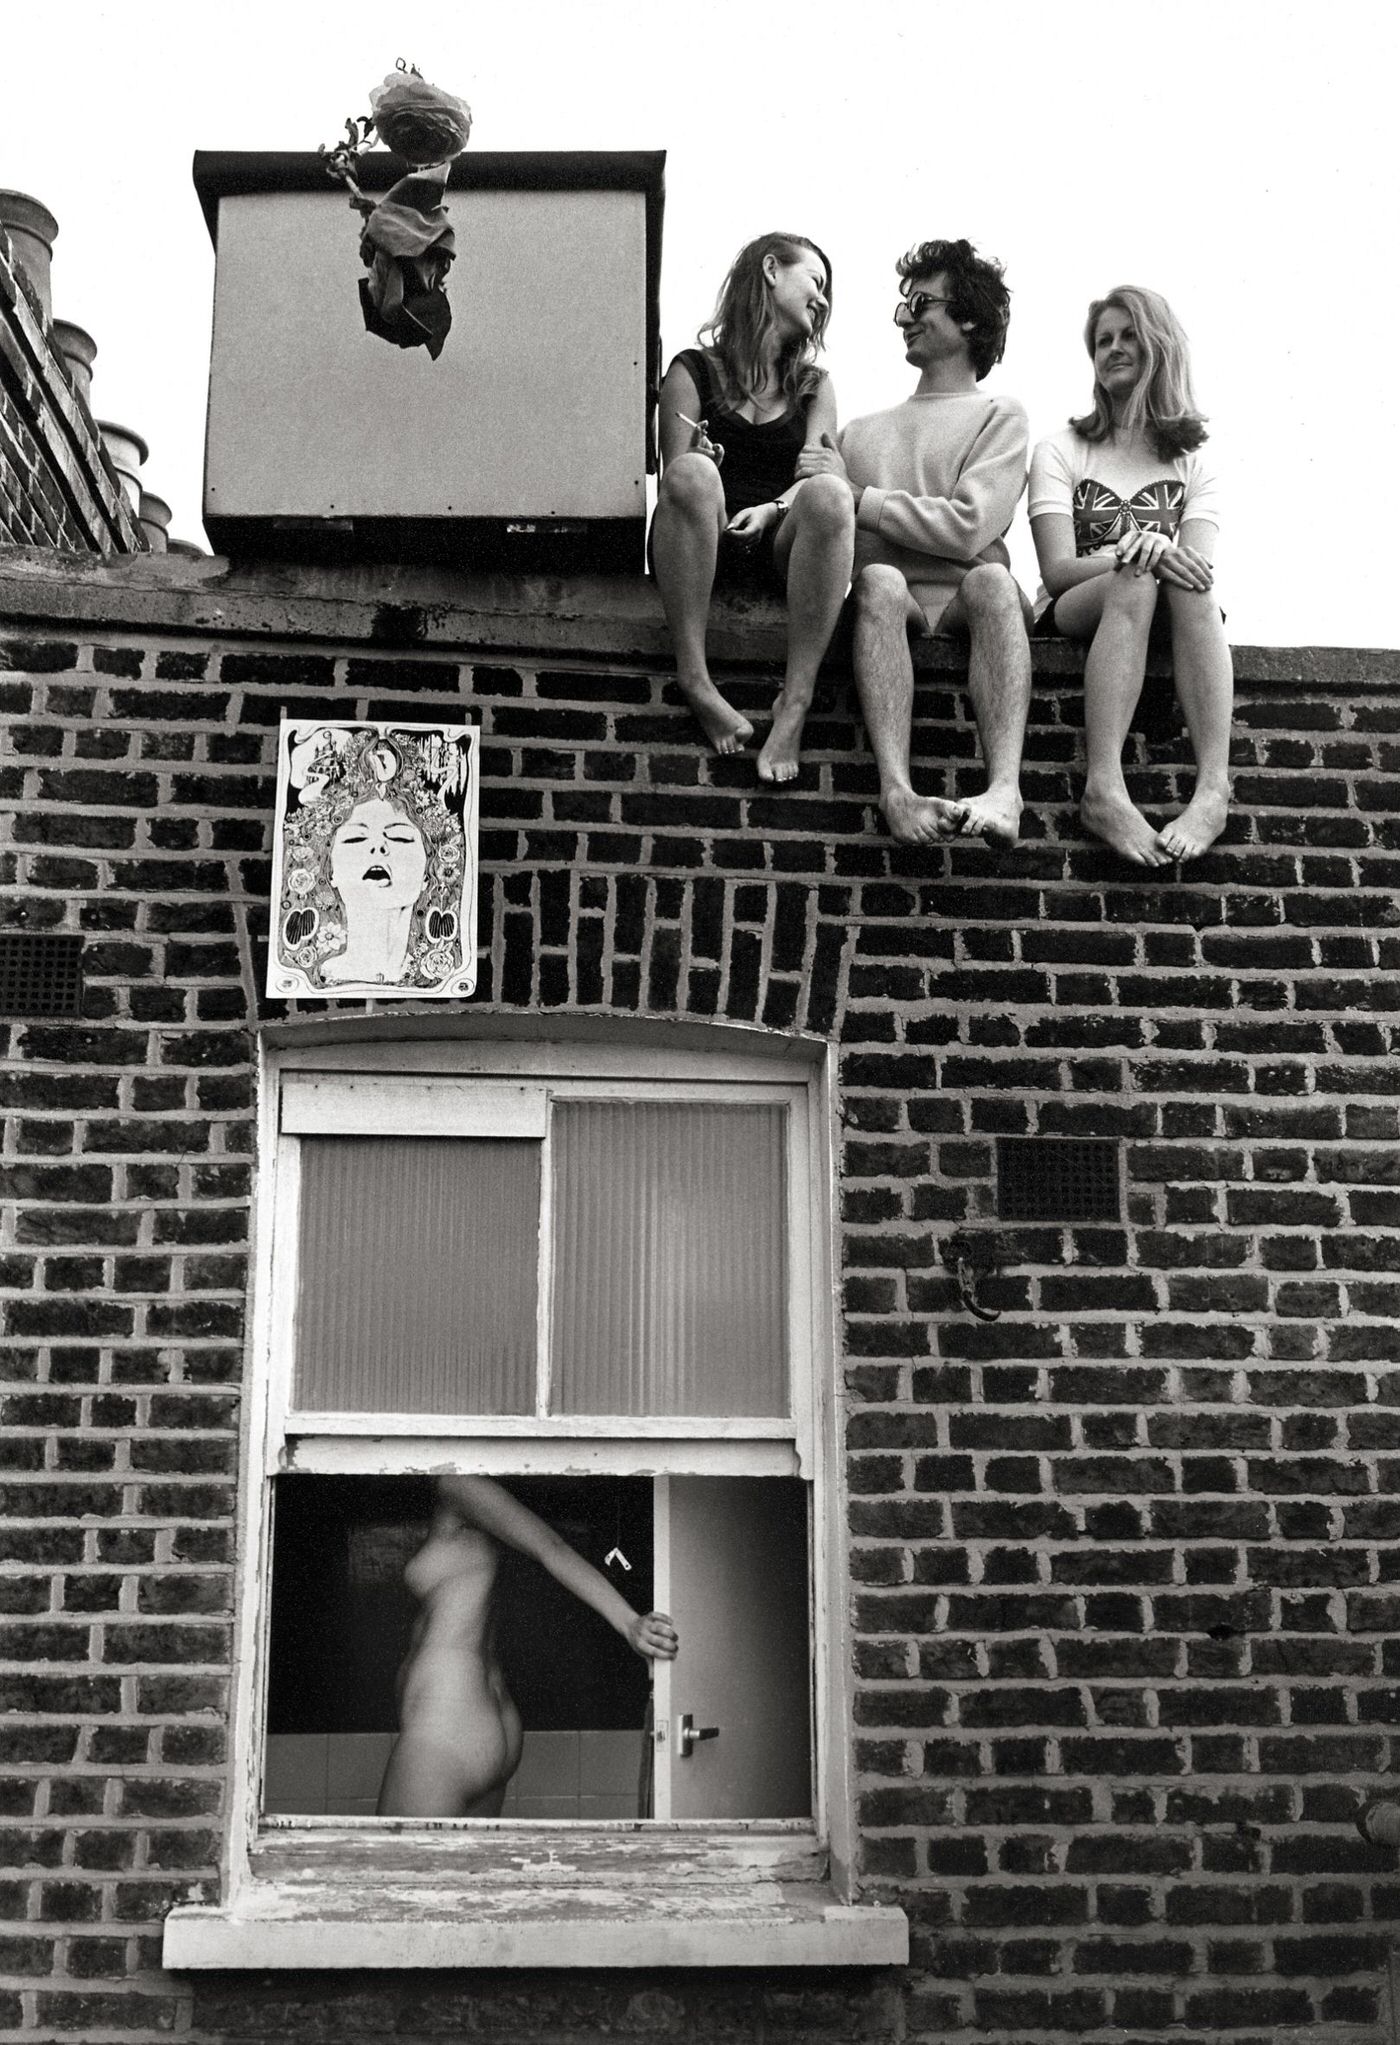 The 1960s Swinging London through the Lens of Frank Habicht